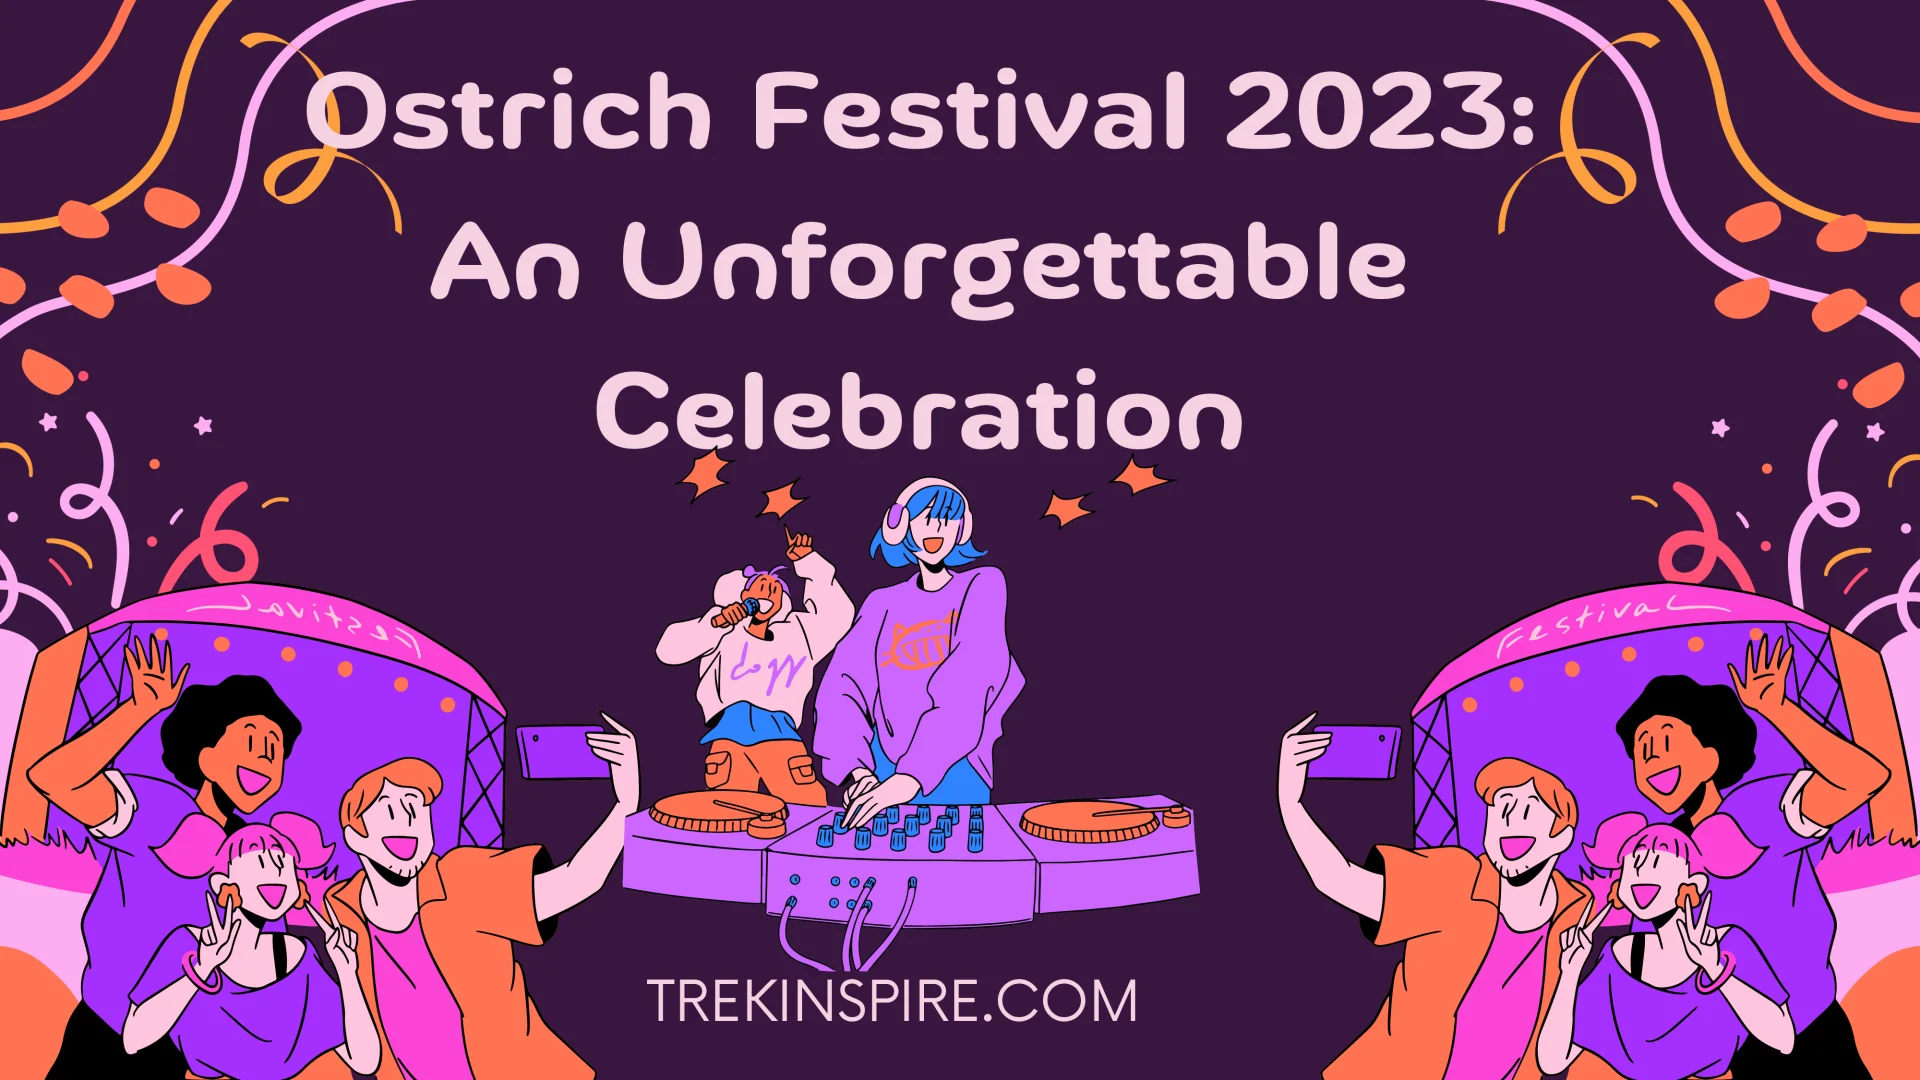 Ostrich Festival 2023